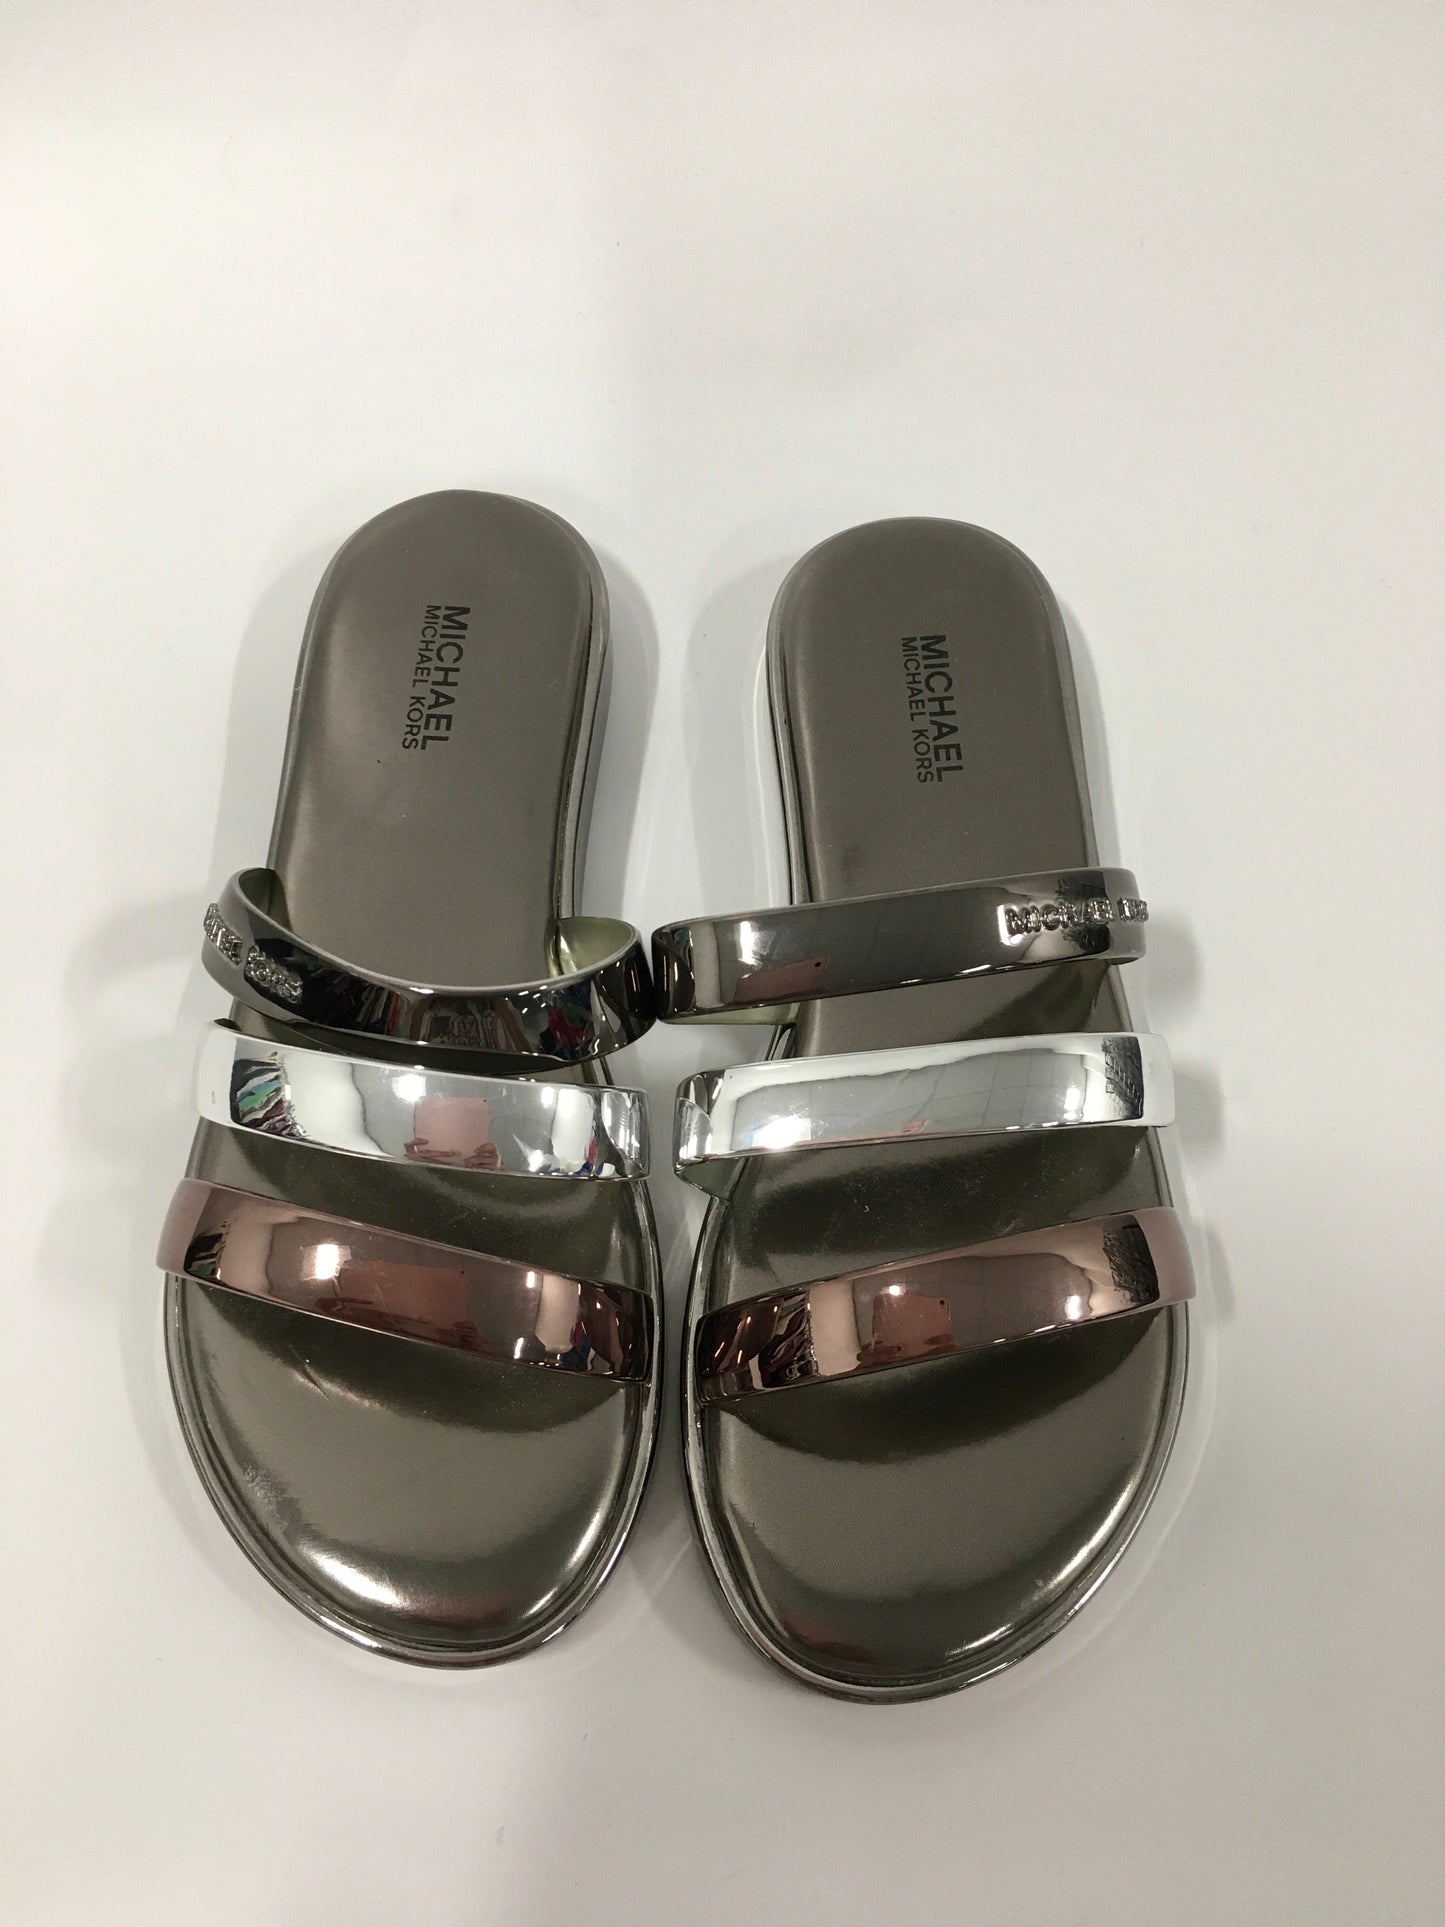 Metallic Sandals Flats Michael Kors, Size 5